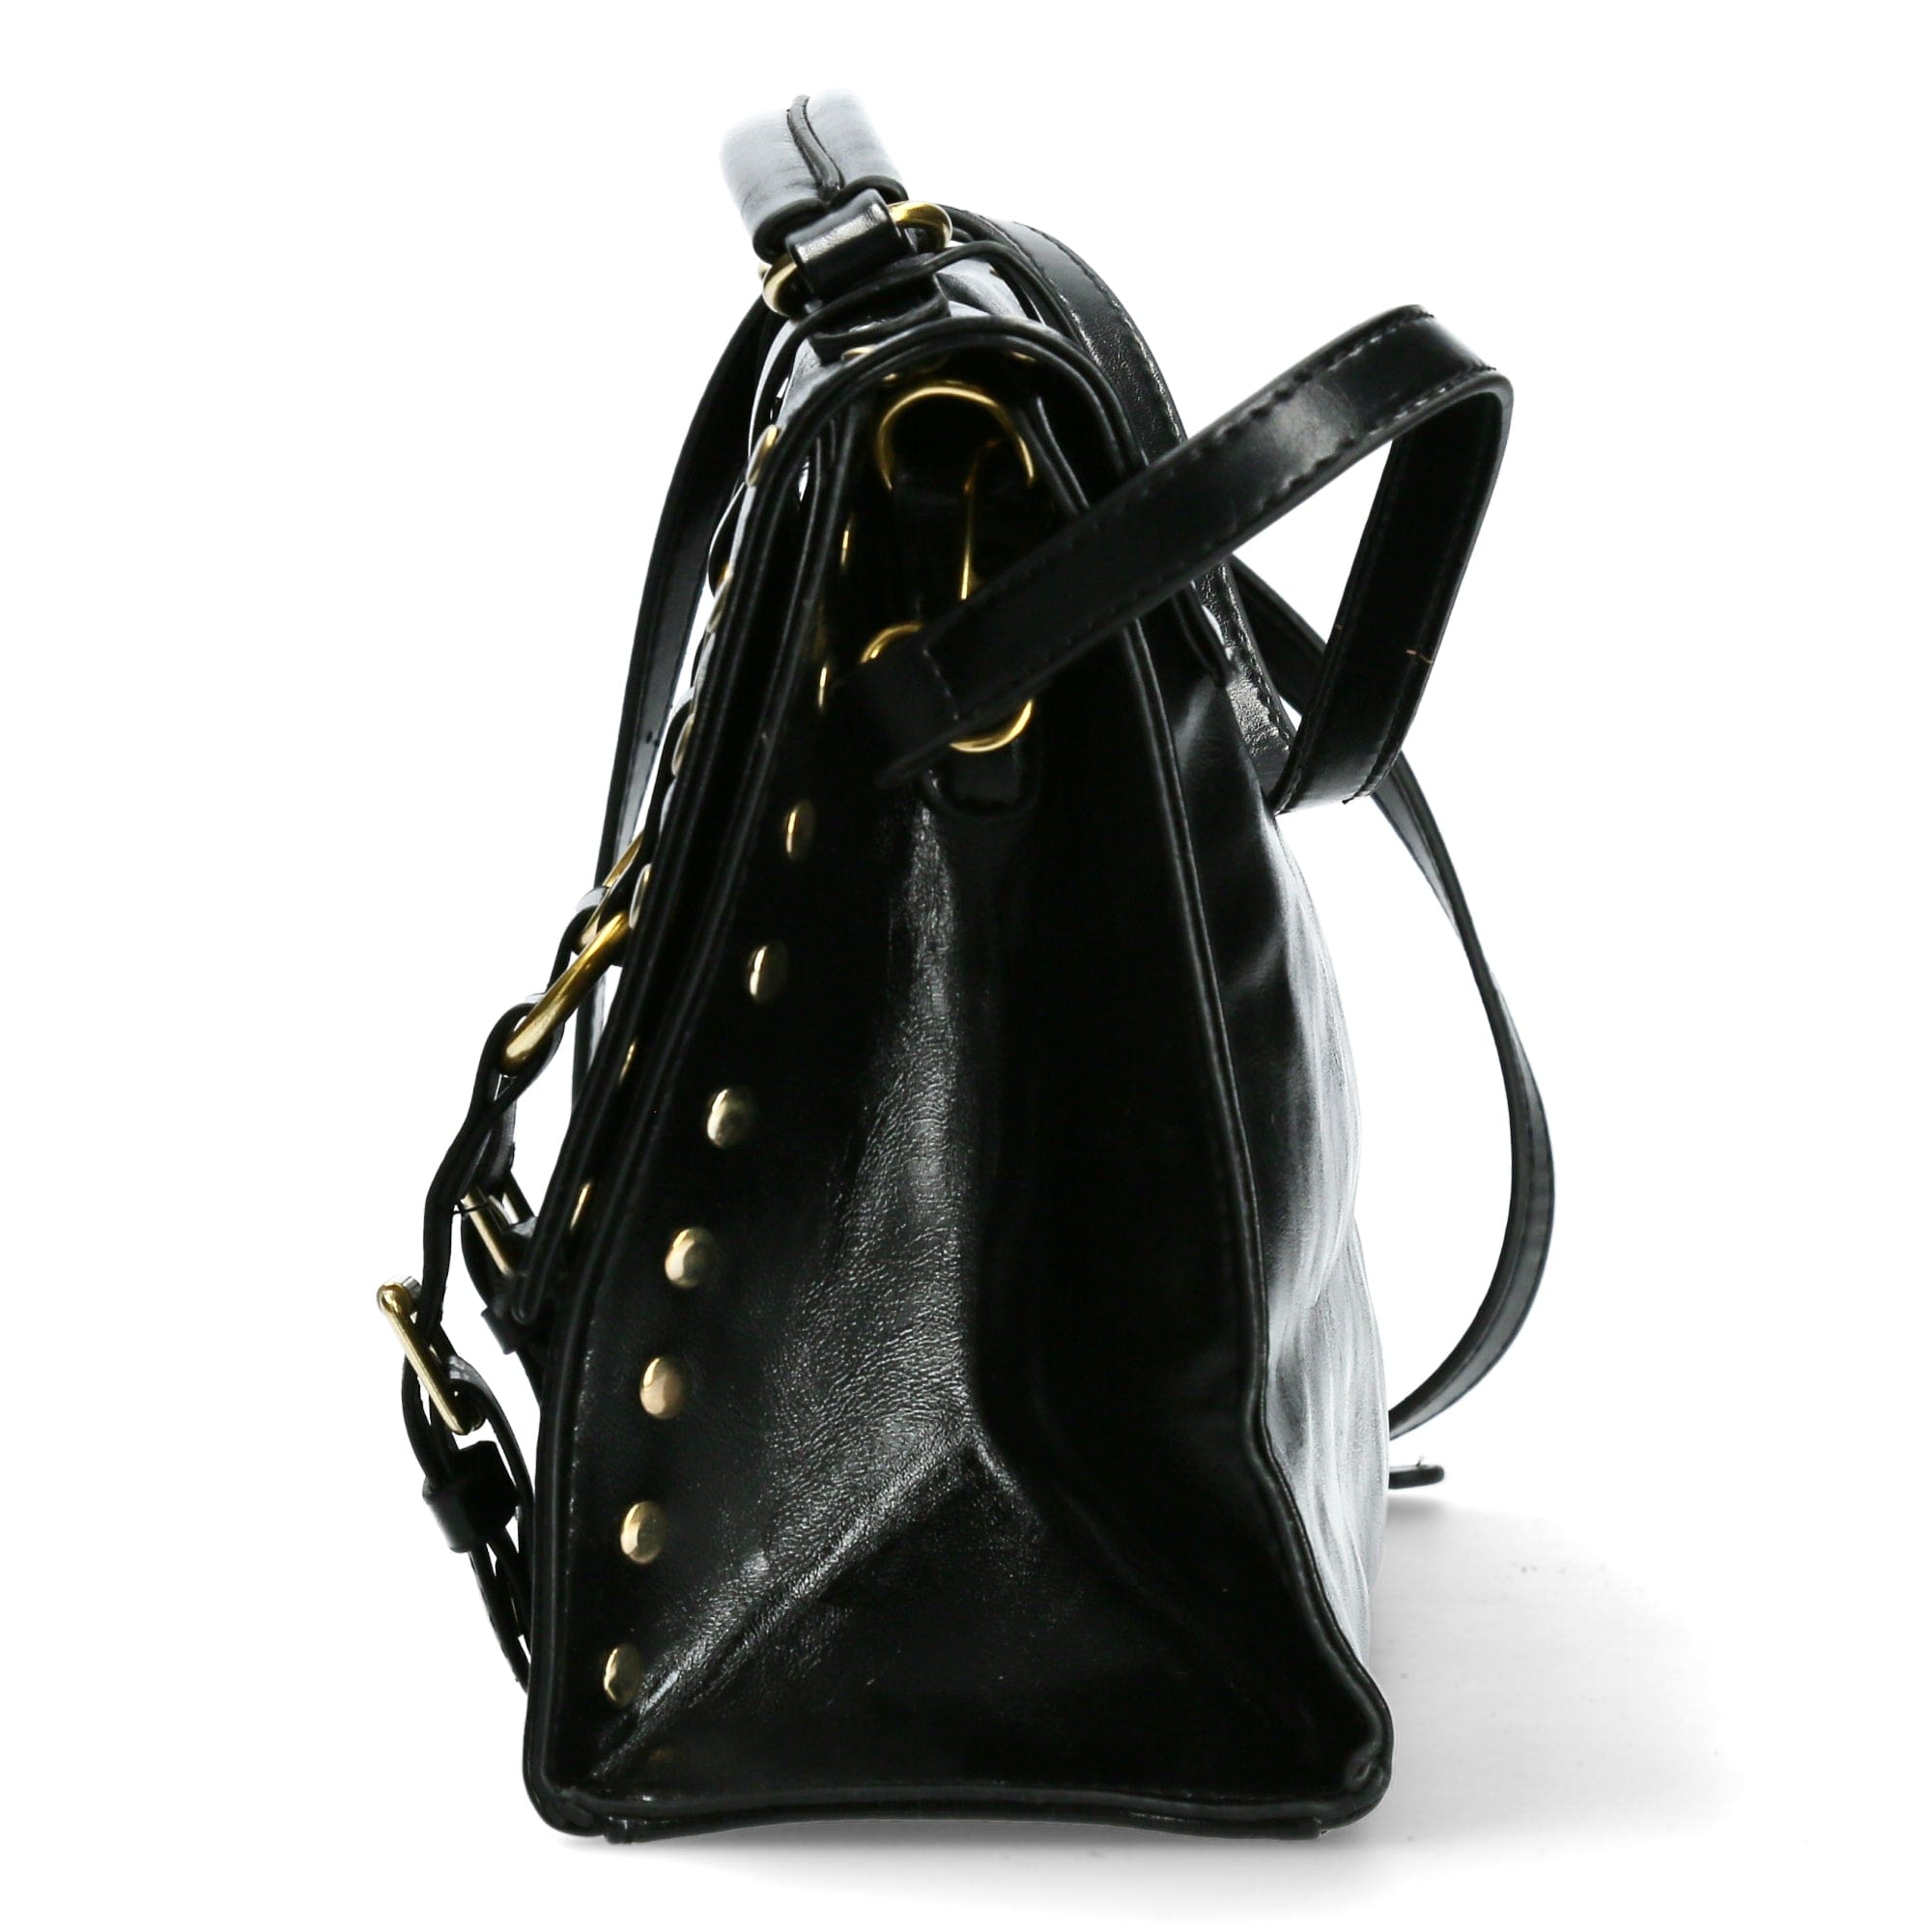 Guichard satchel bag